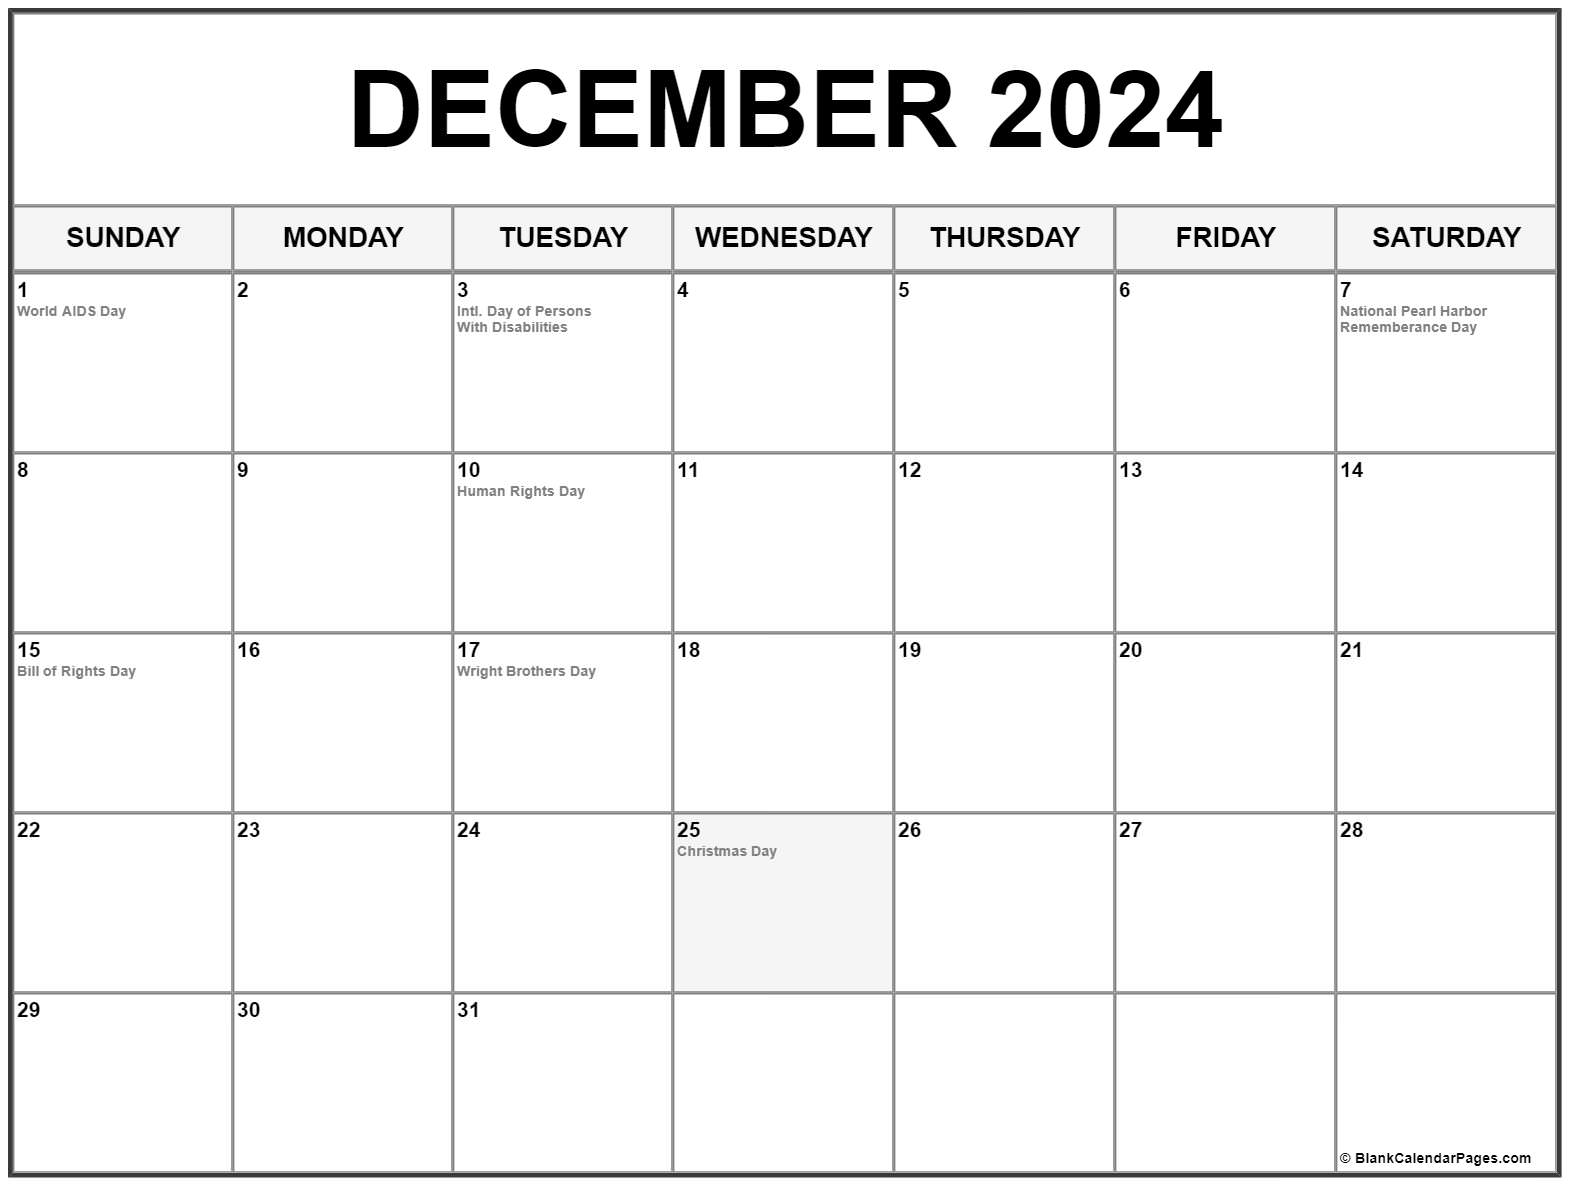 December 2022 Calendar With Holidays December 2022 With Holidays Calendar